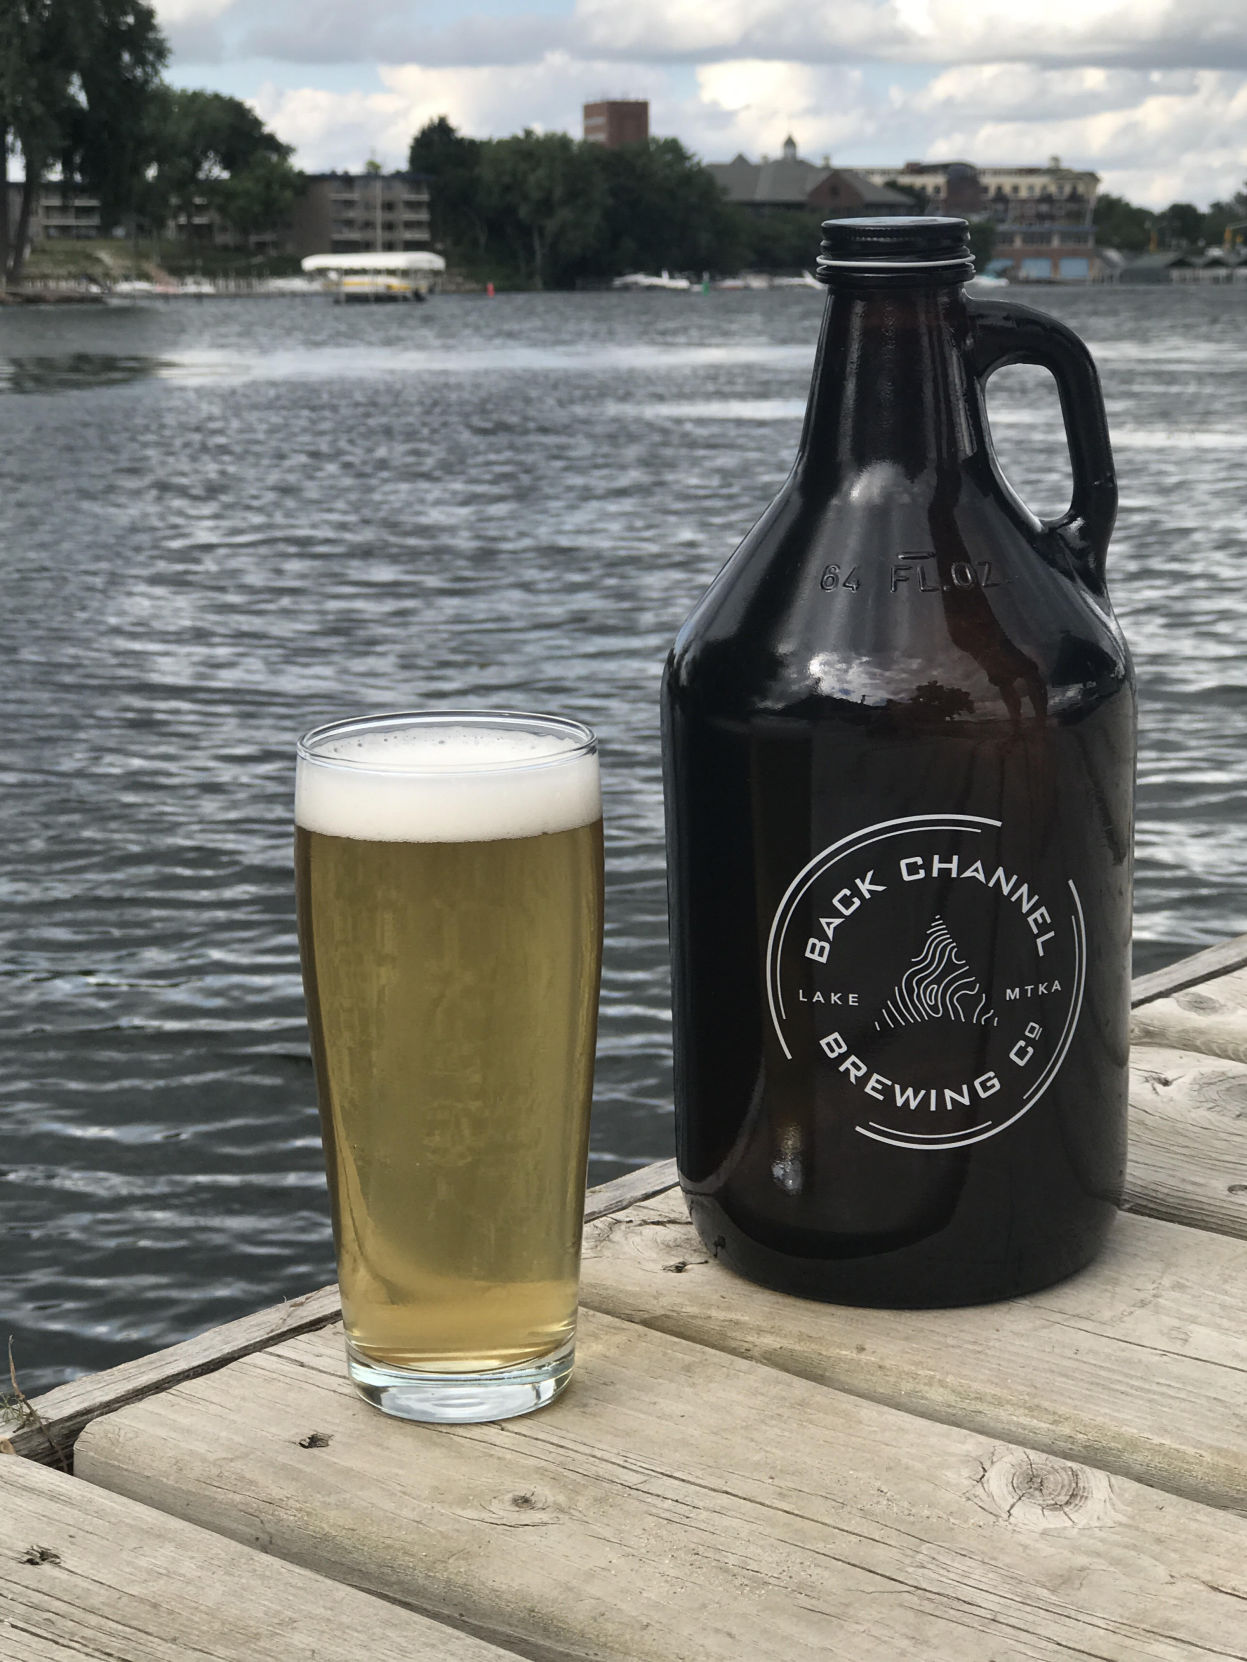 Beer Decal-Back Channel Brewing-Lake Minnetonka Minnesota 